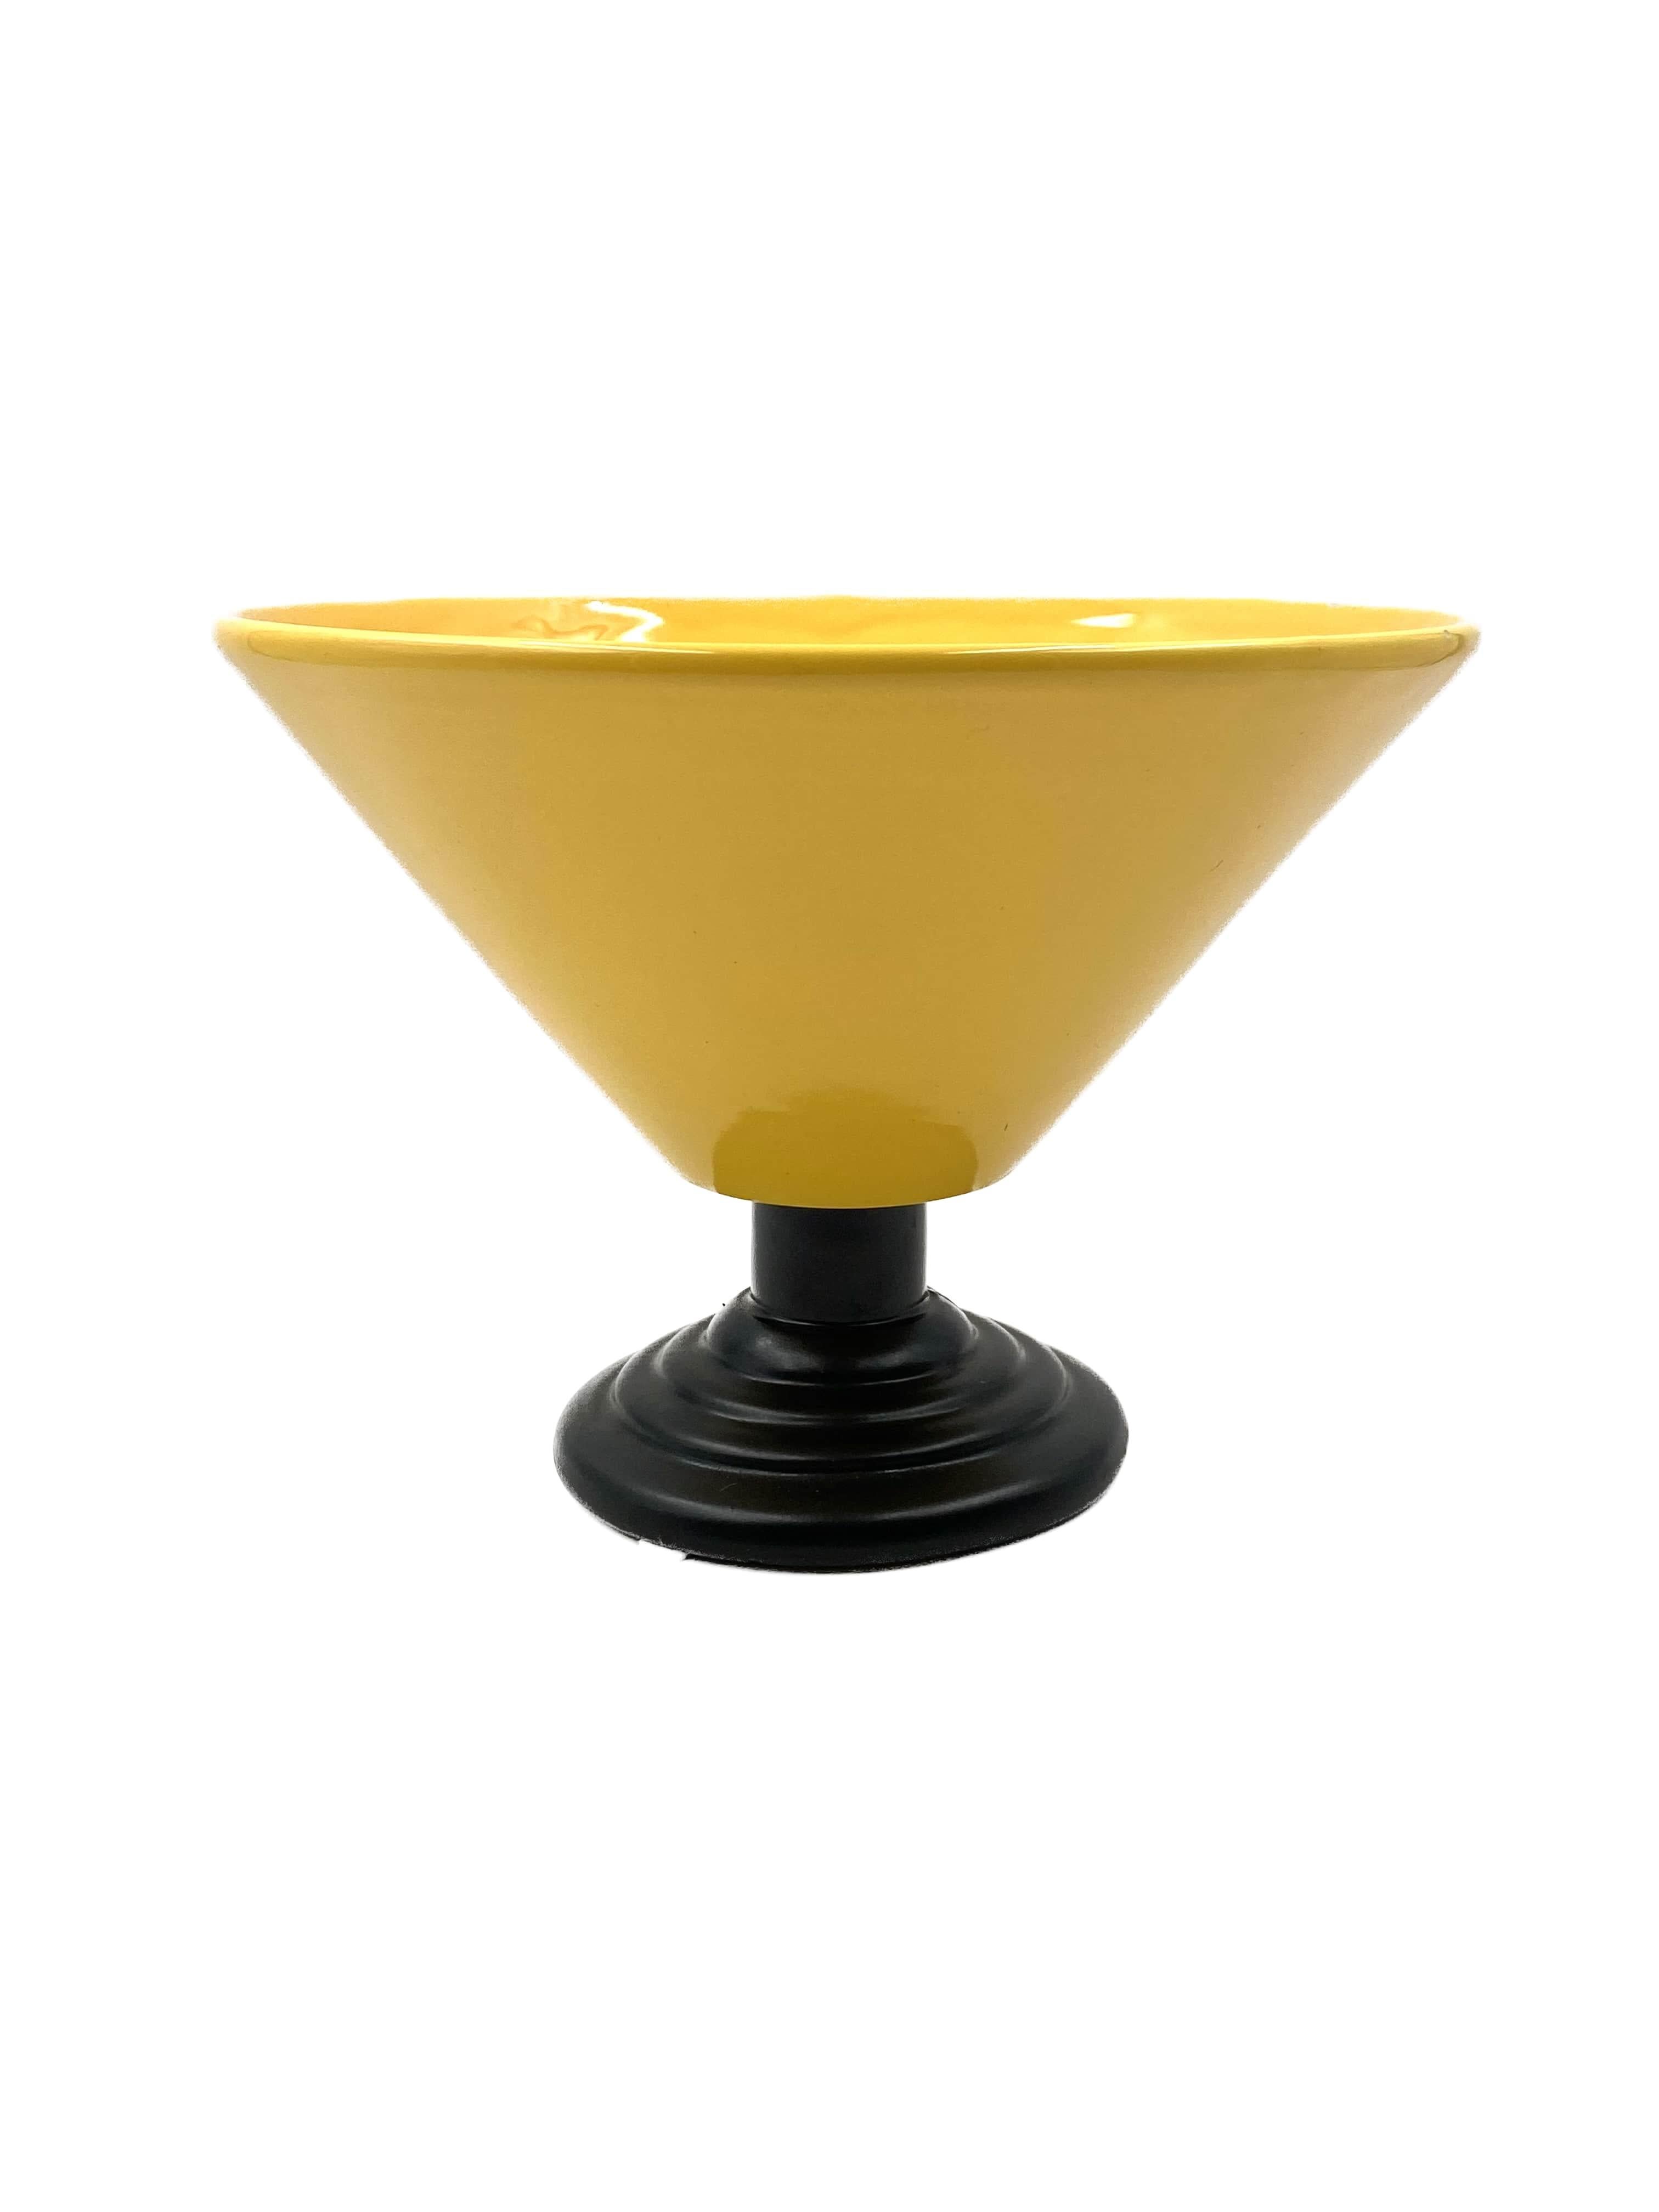 Italian Yellow Conic Vase, Postmodern Memphis Milan Style, Italy 1980s For Sale